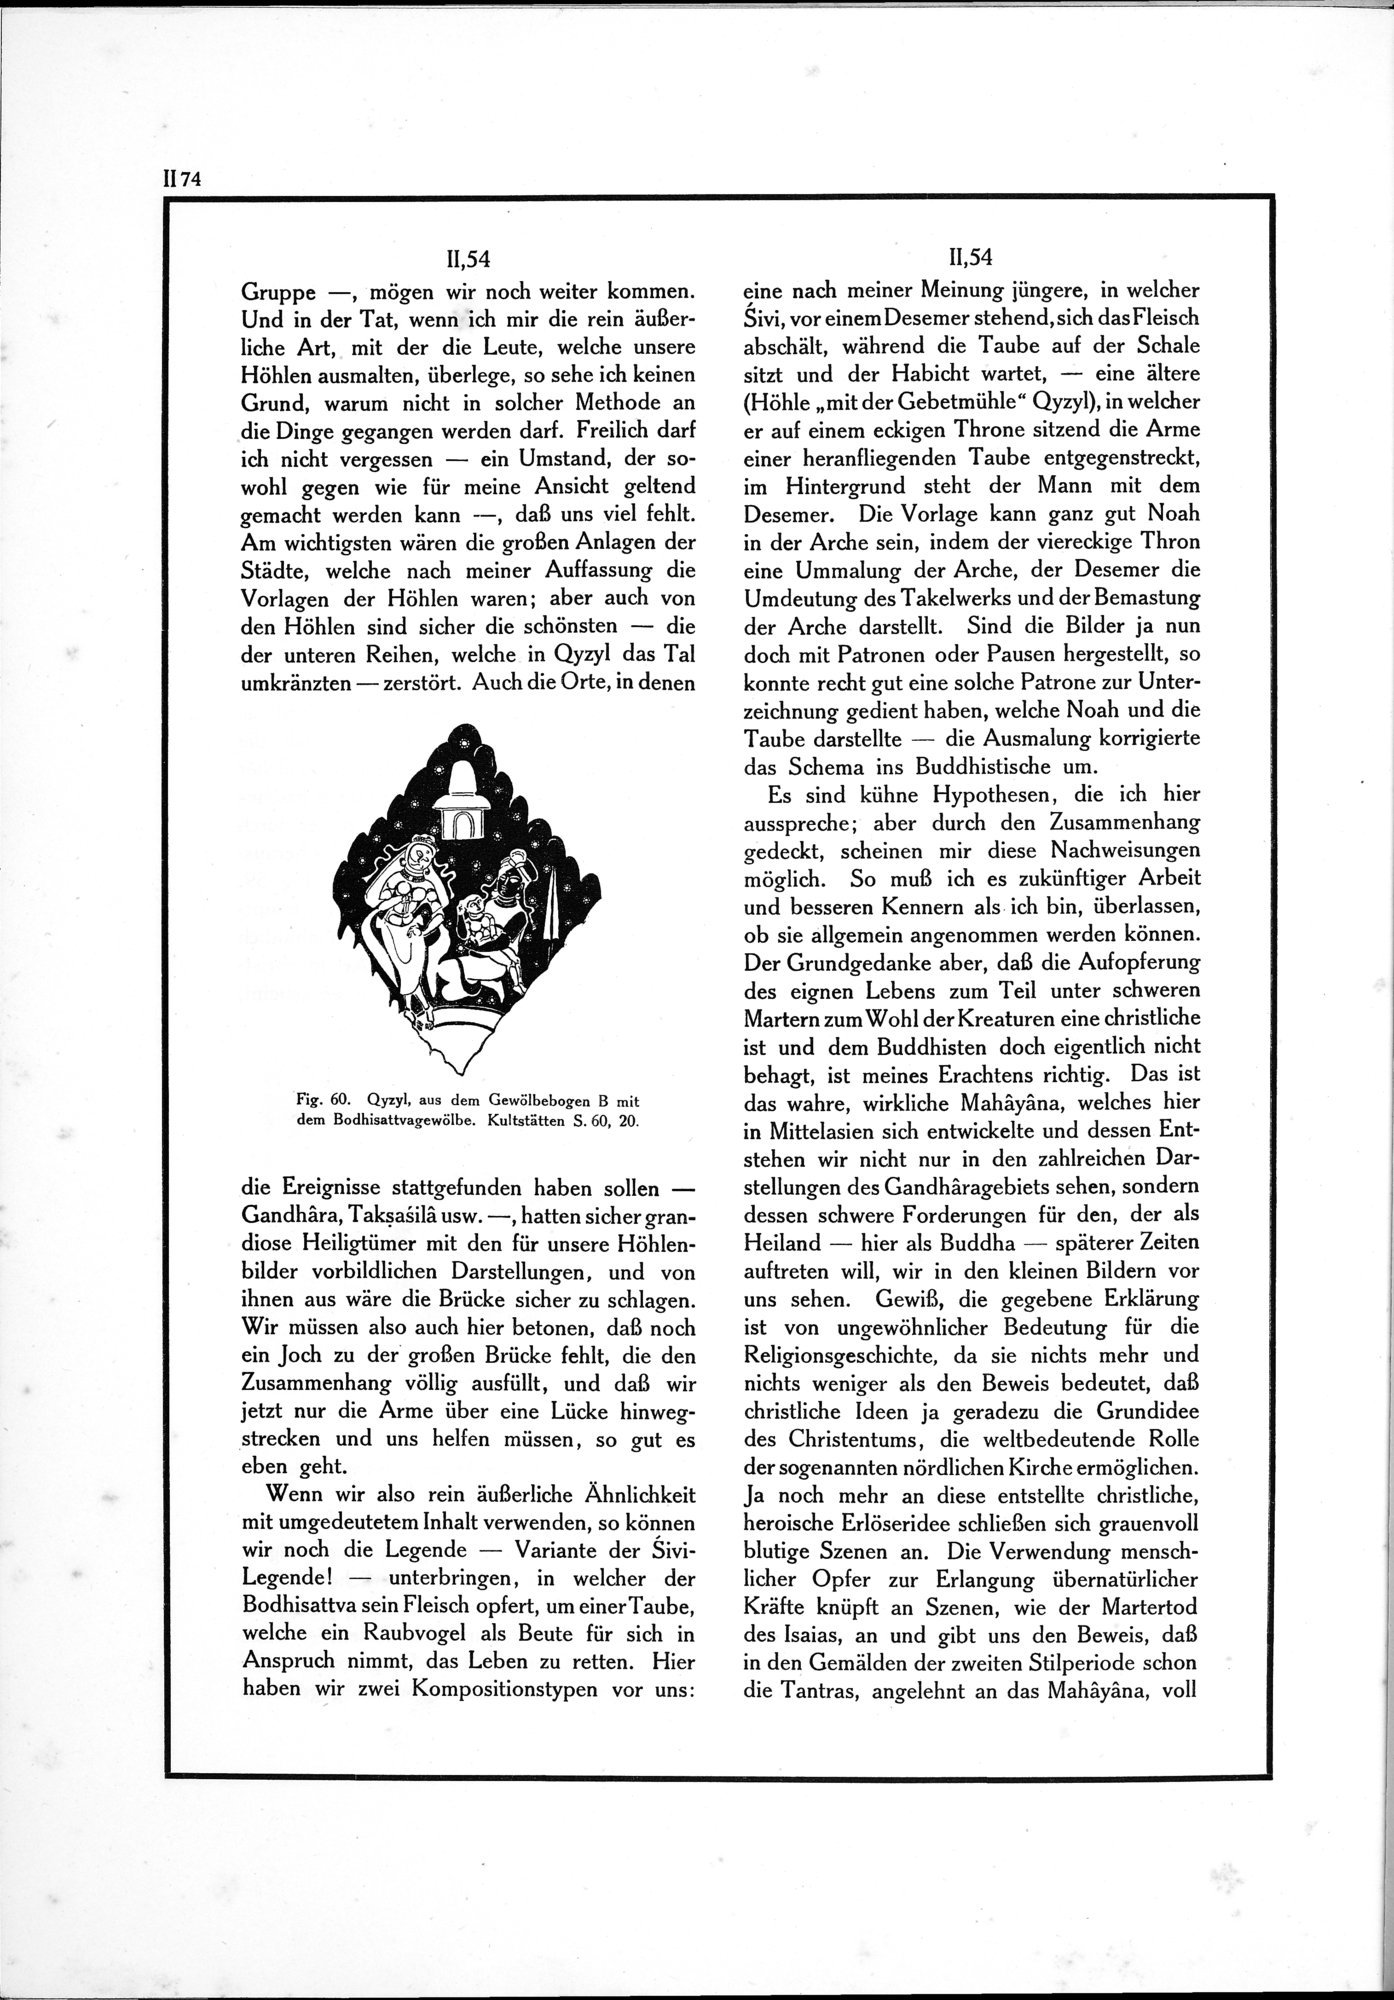 Alt-Kutscha : vol.1 / Page 184 (Grayscale High Resolution Image)